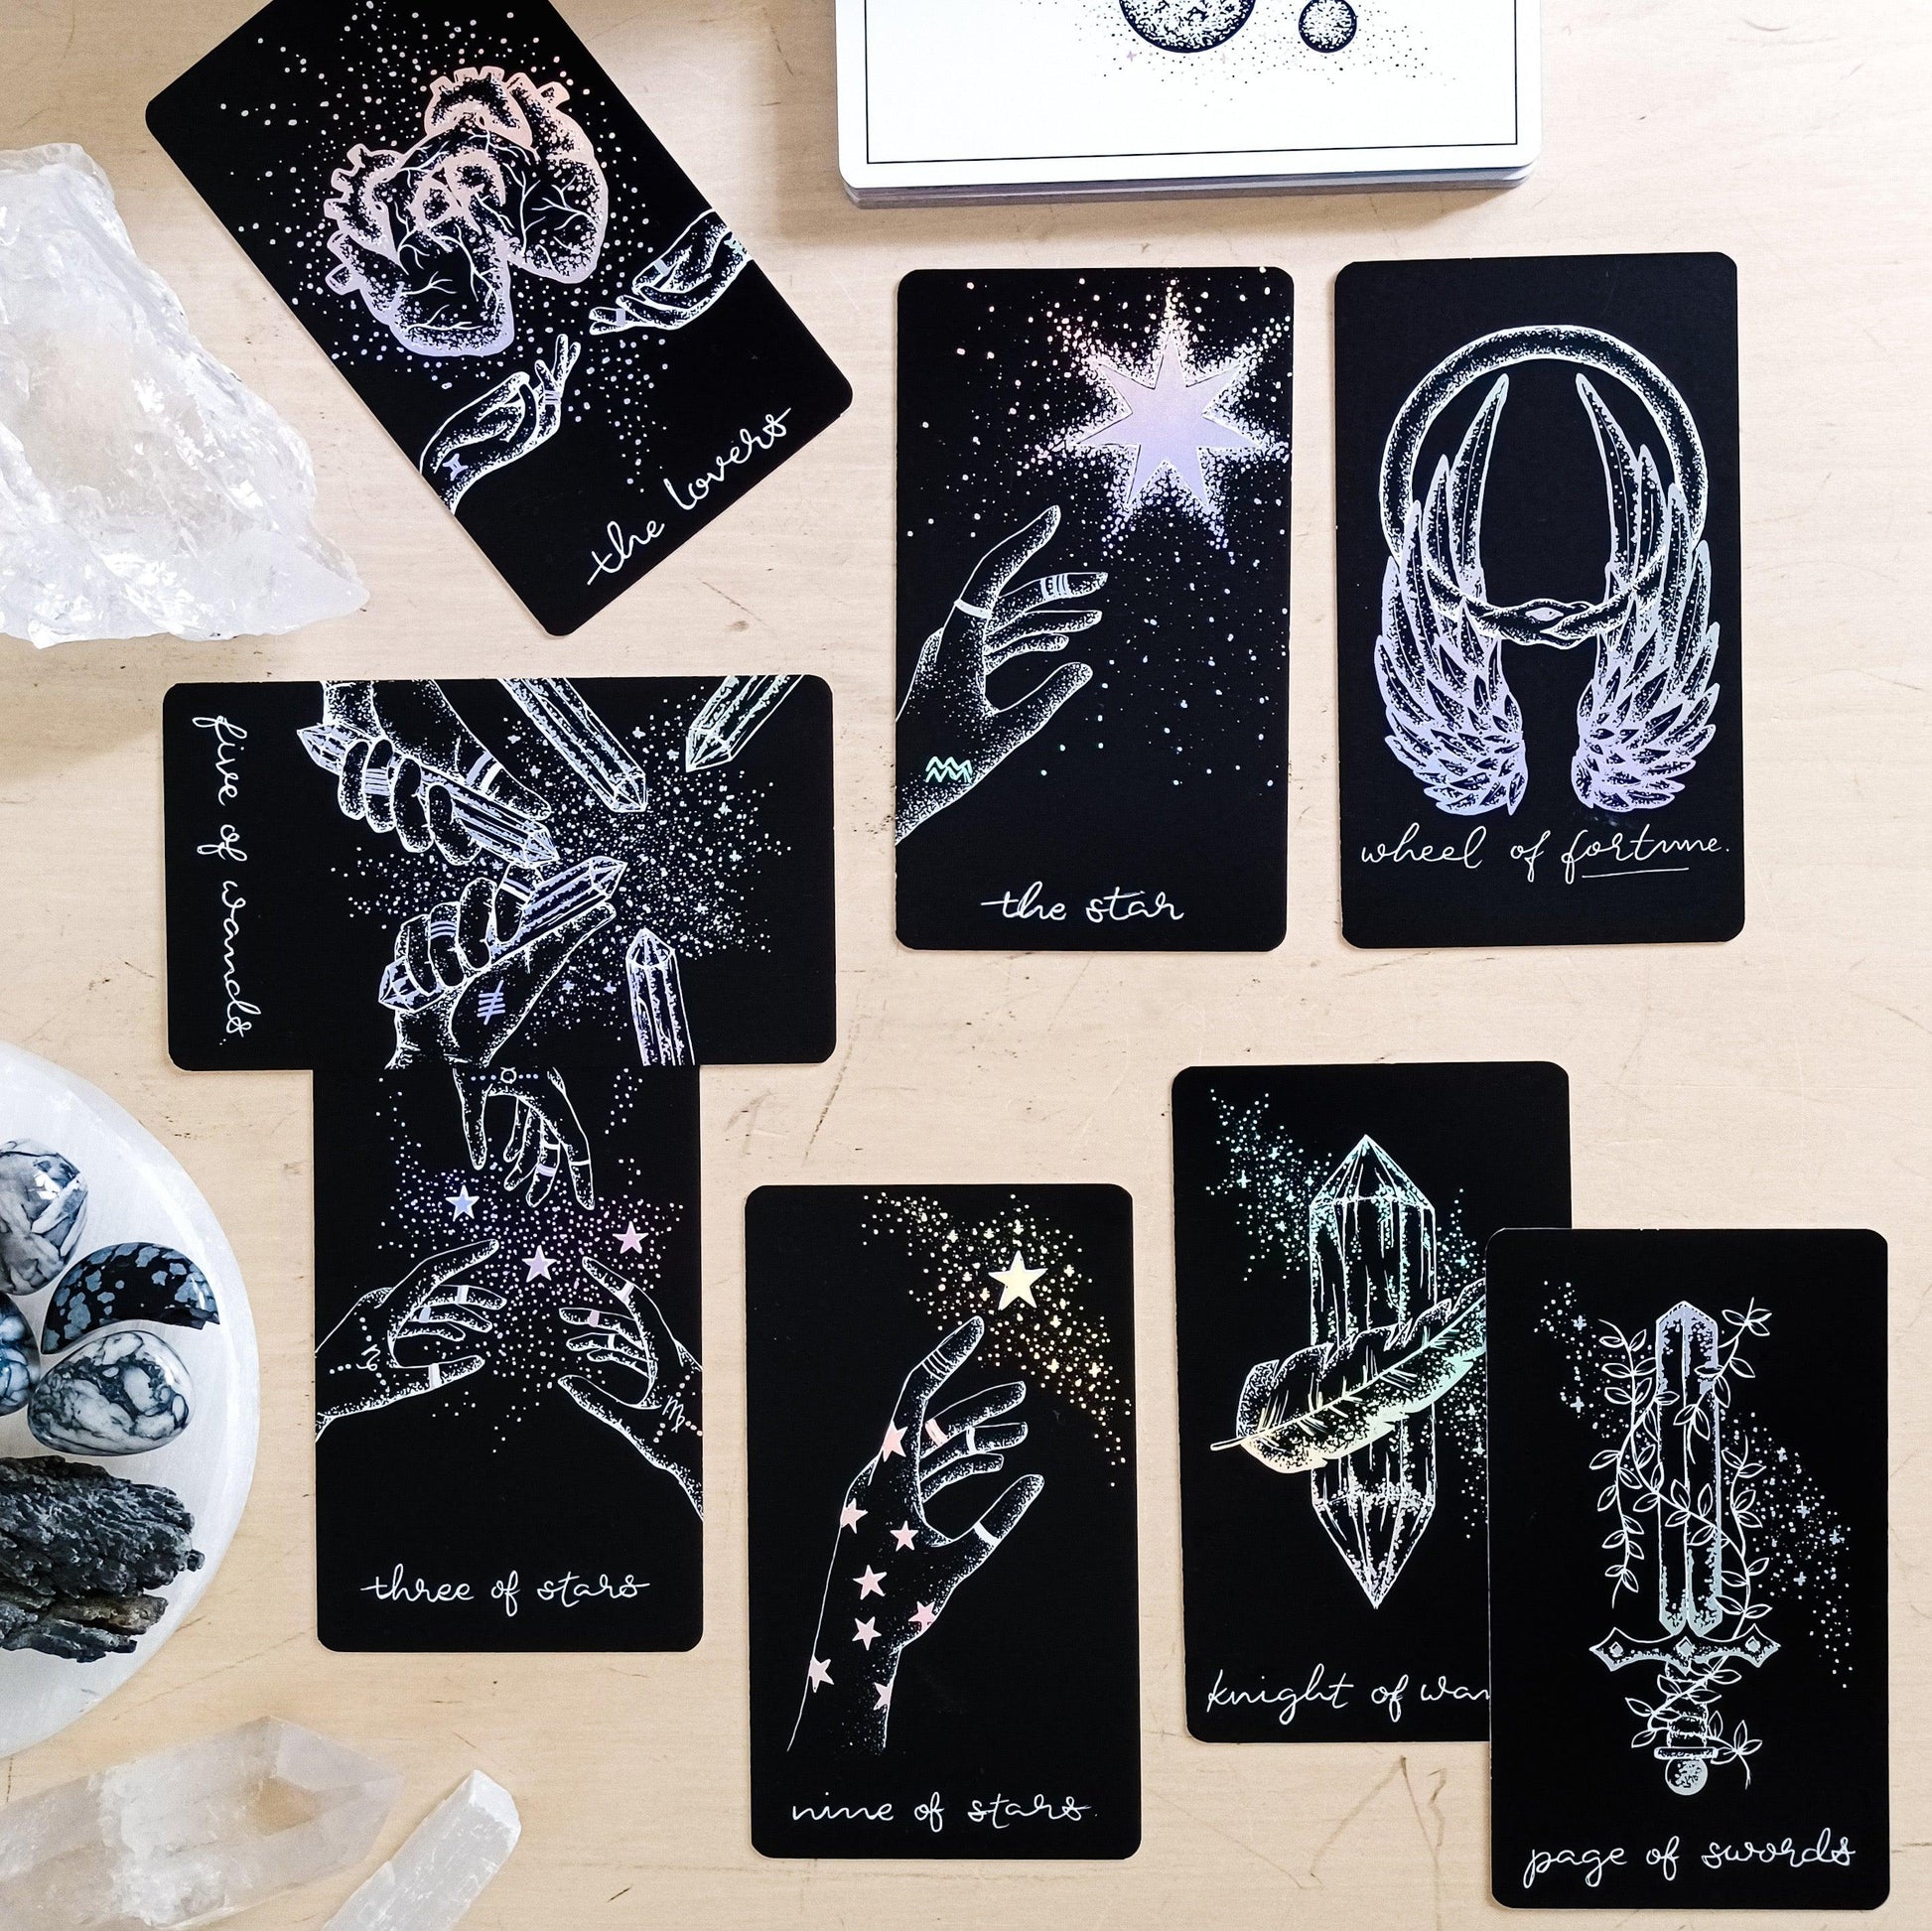 8 card in depth divination tarot spread, showing court cards & minor arcana tarot cards